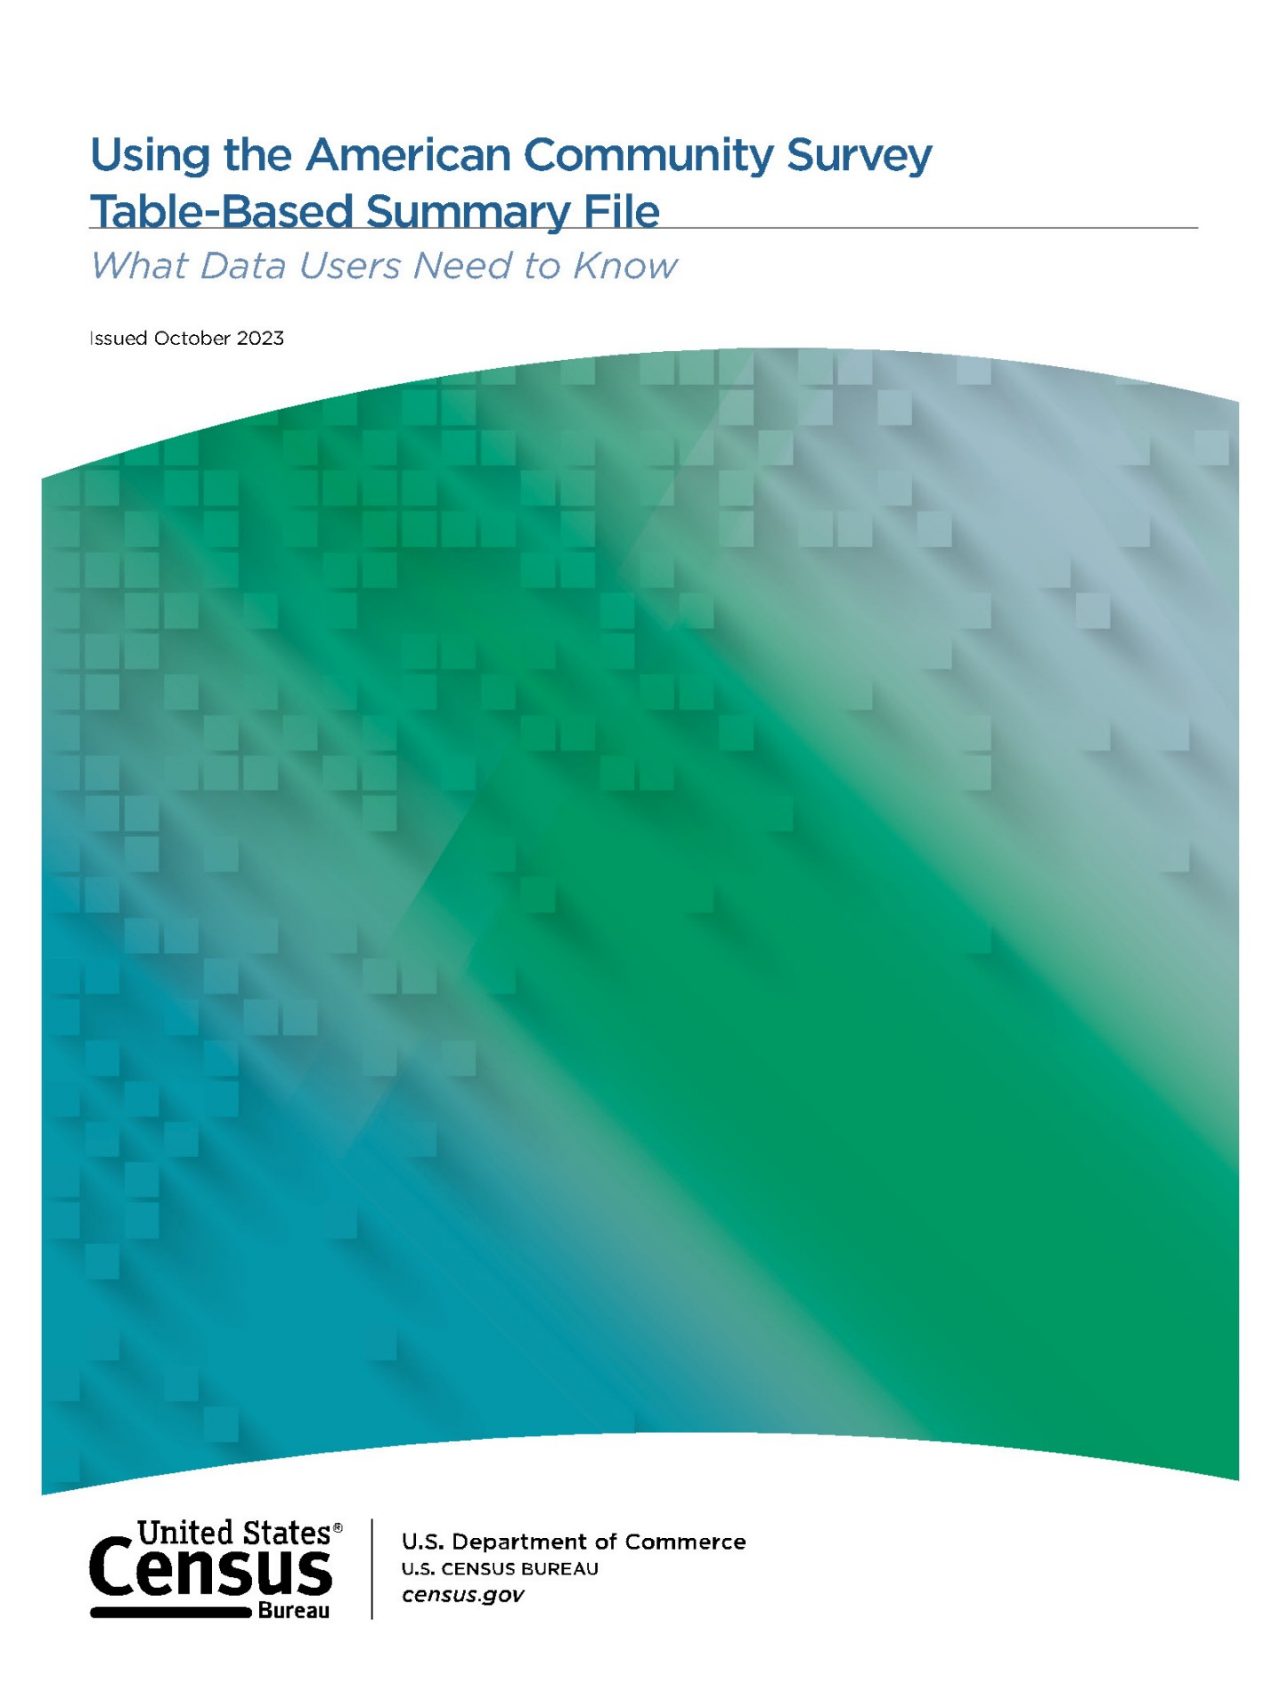 ACS Handbook for Table-Based Summary File Users